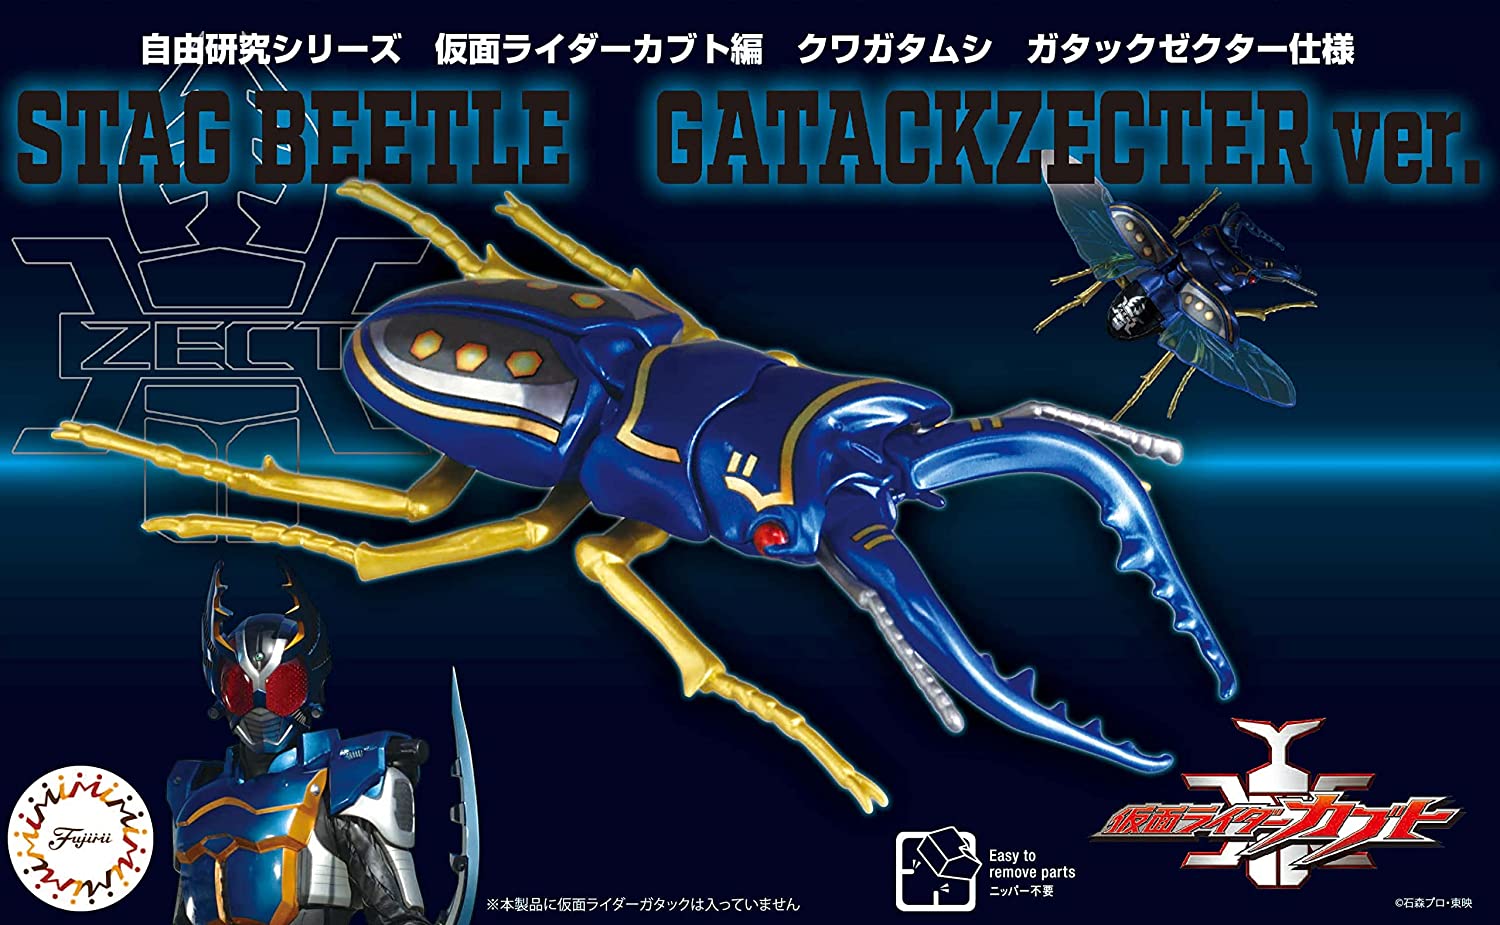 Kamen Rider Kabuto Edition Stag Beetle Type Gatackzecter